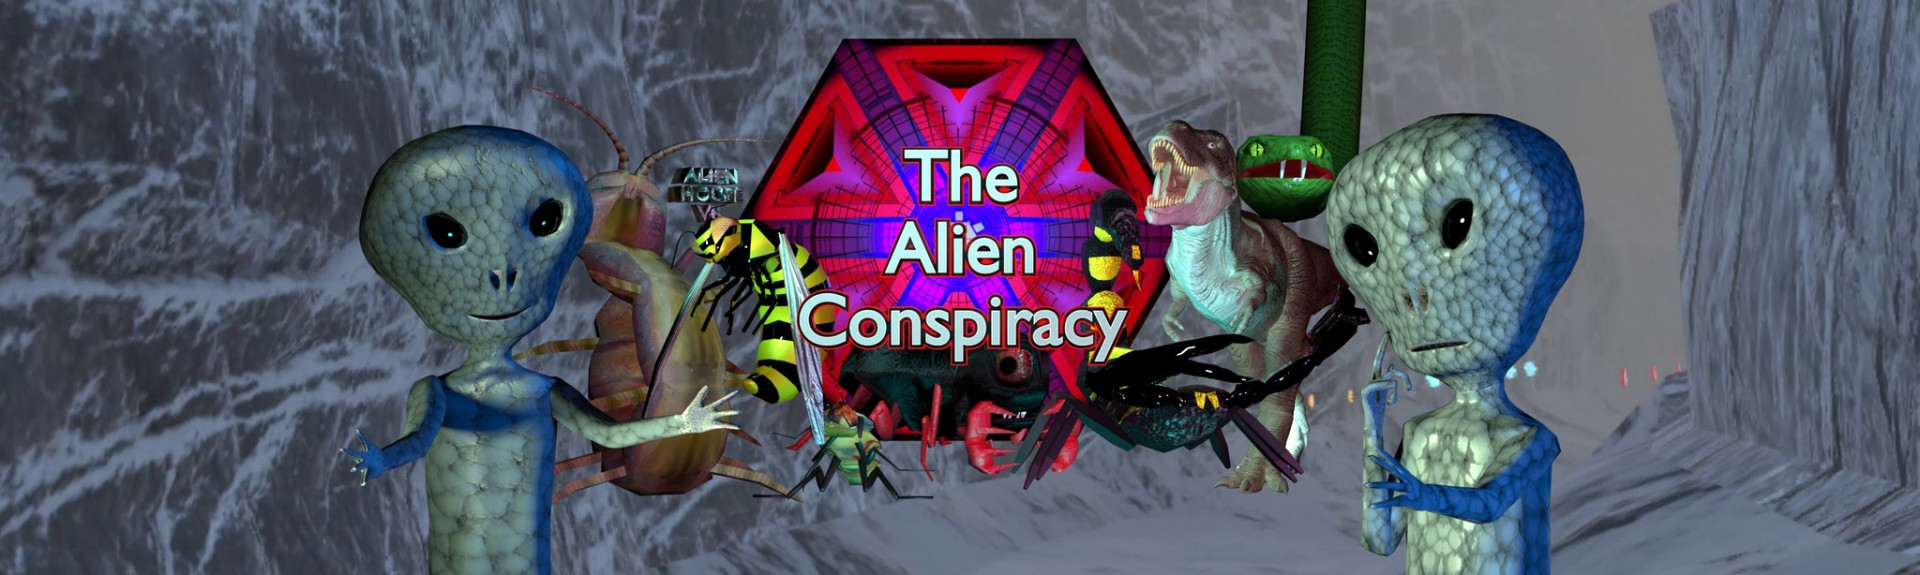 The Alien Conspiracy